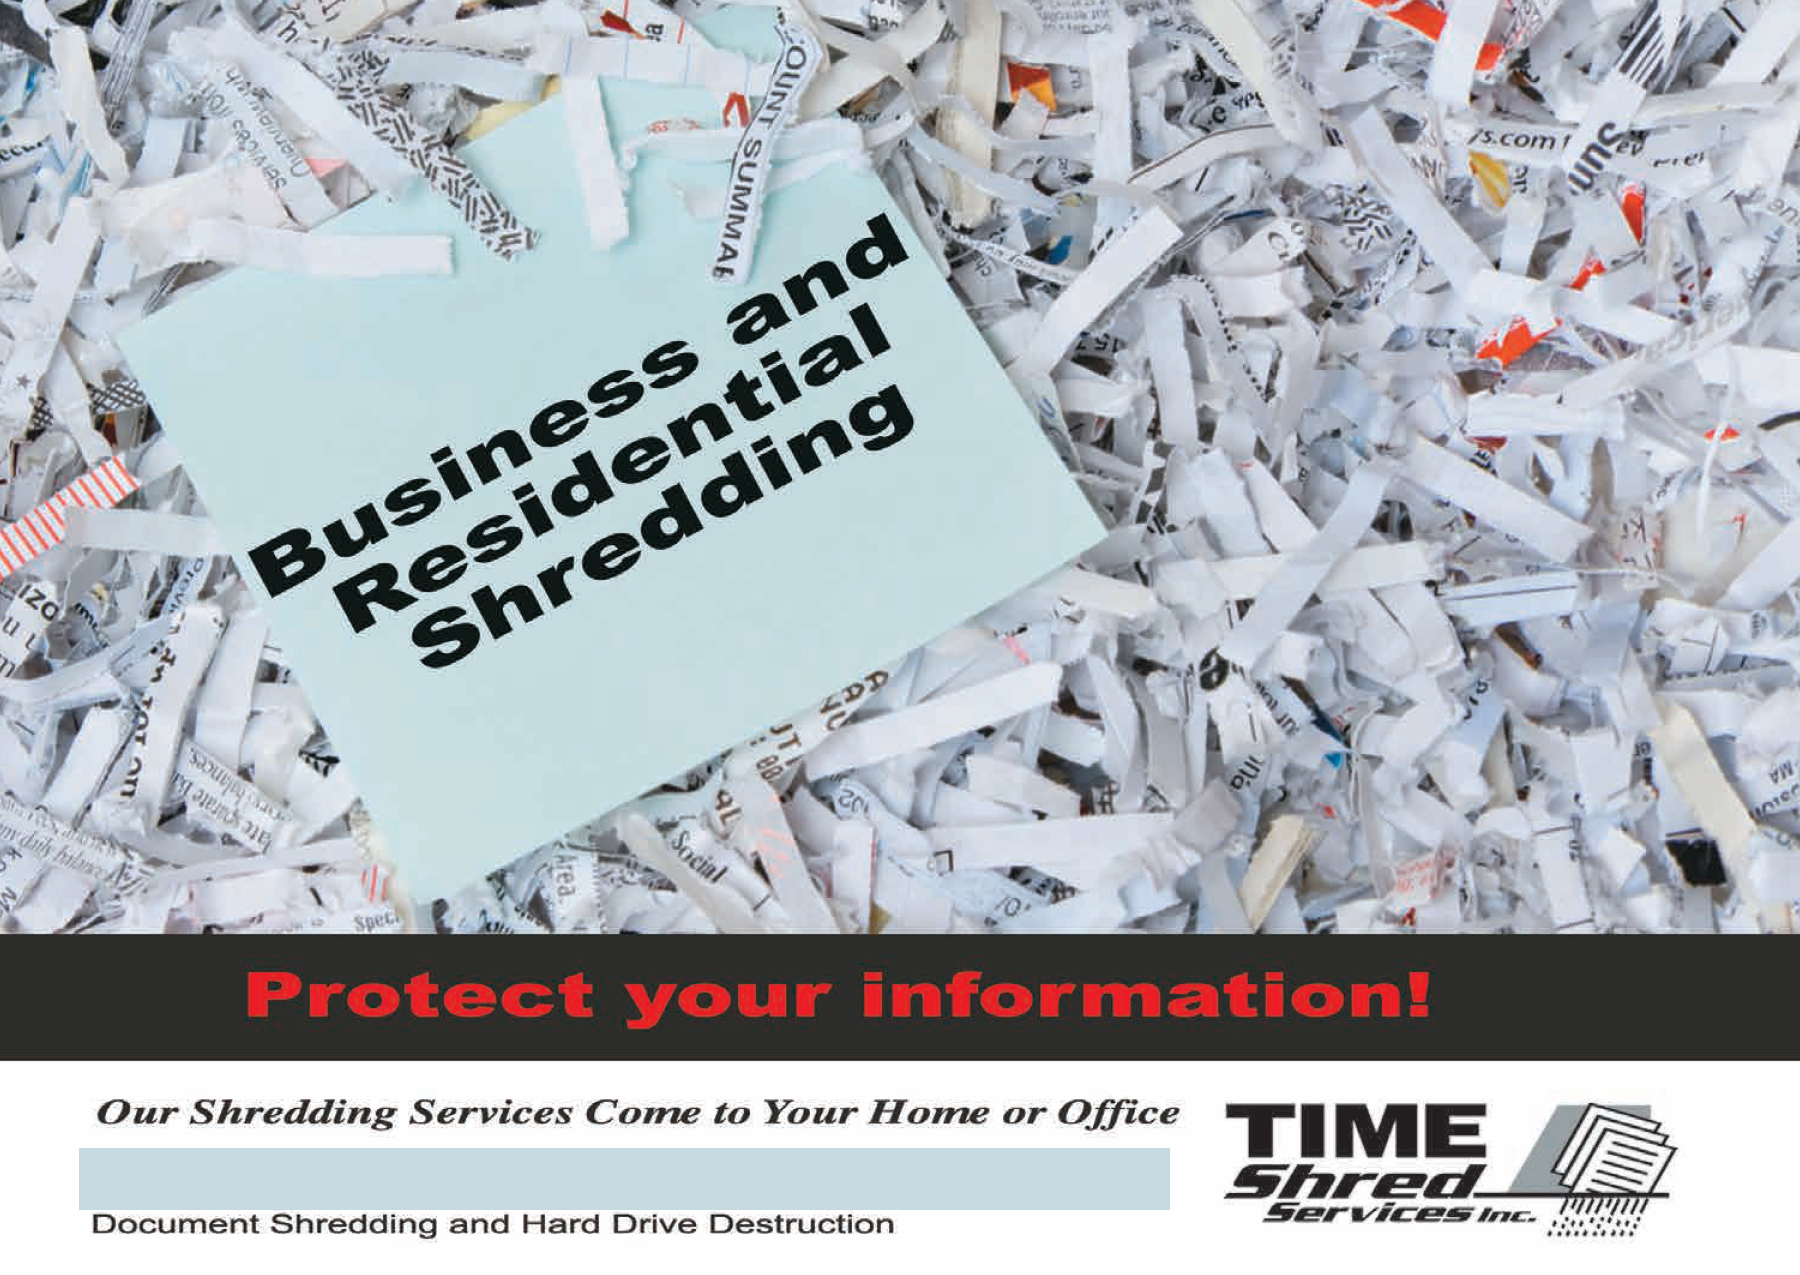 Successful Business Services Postcard Campaign